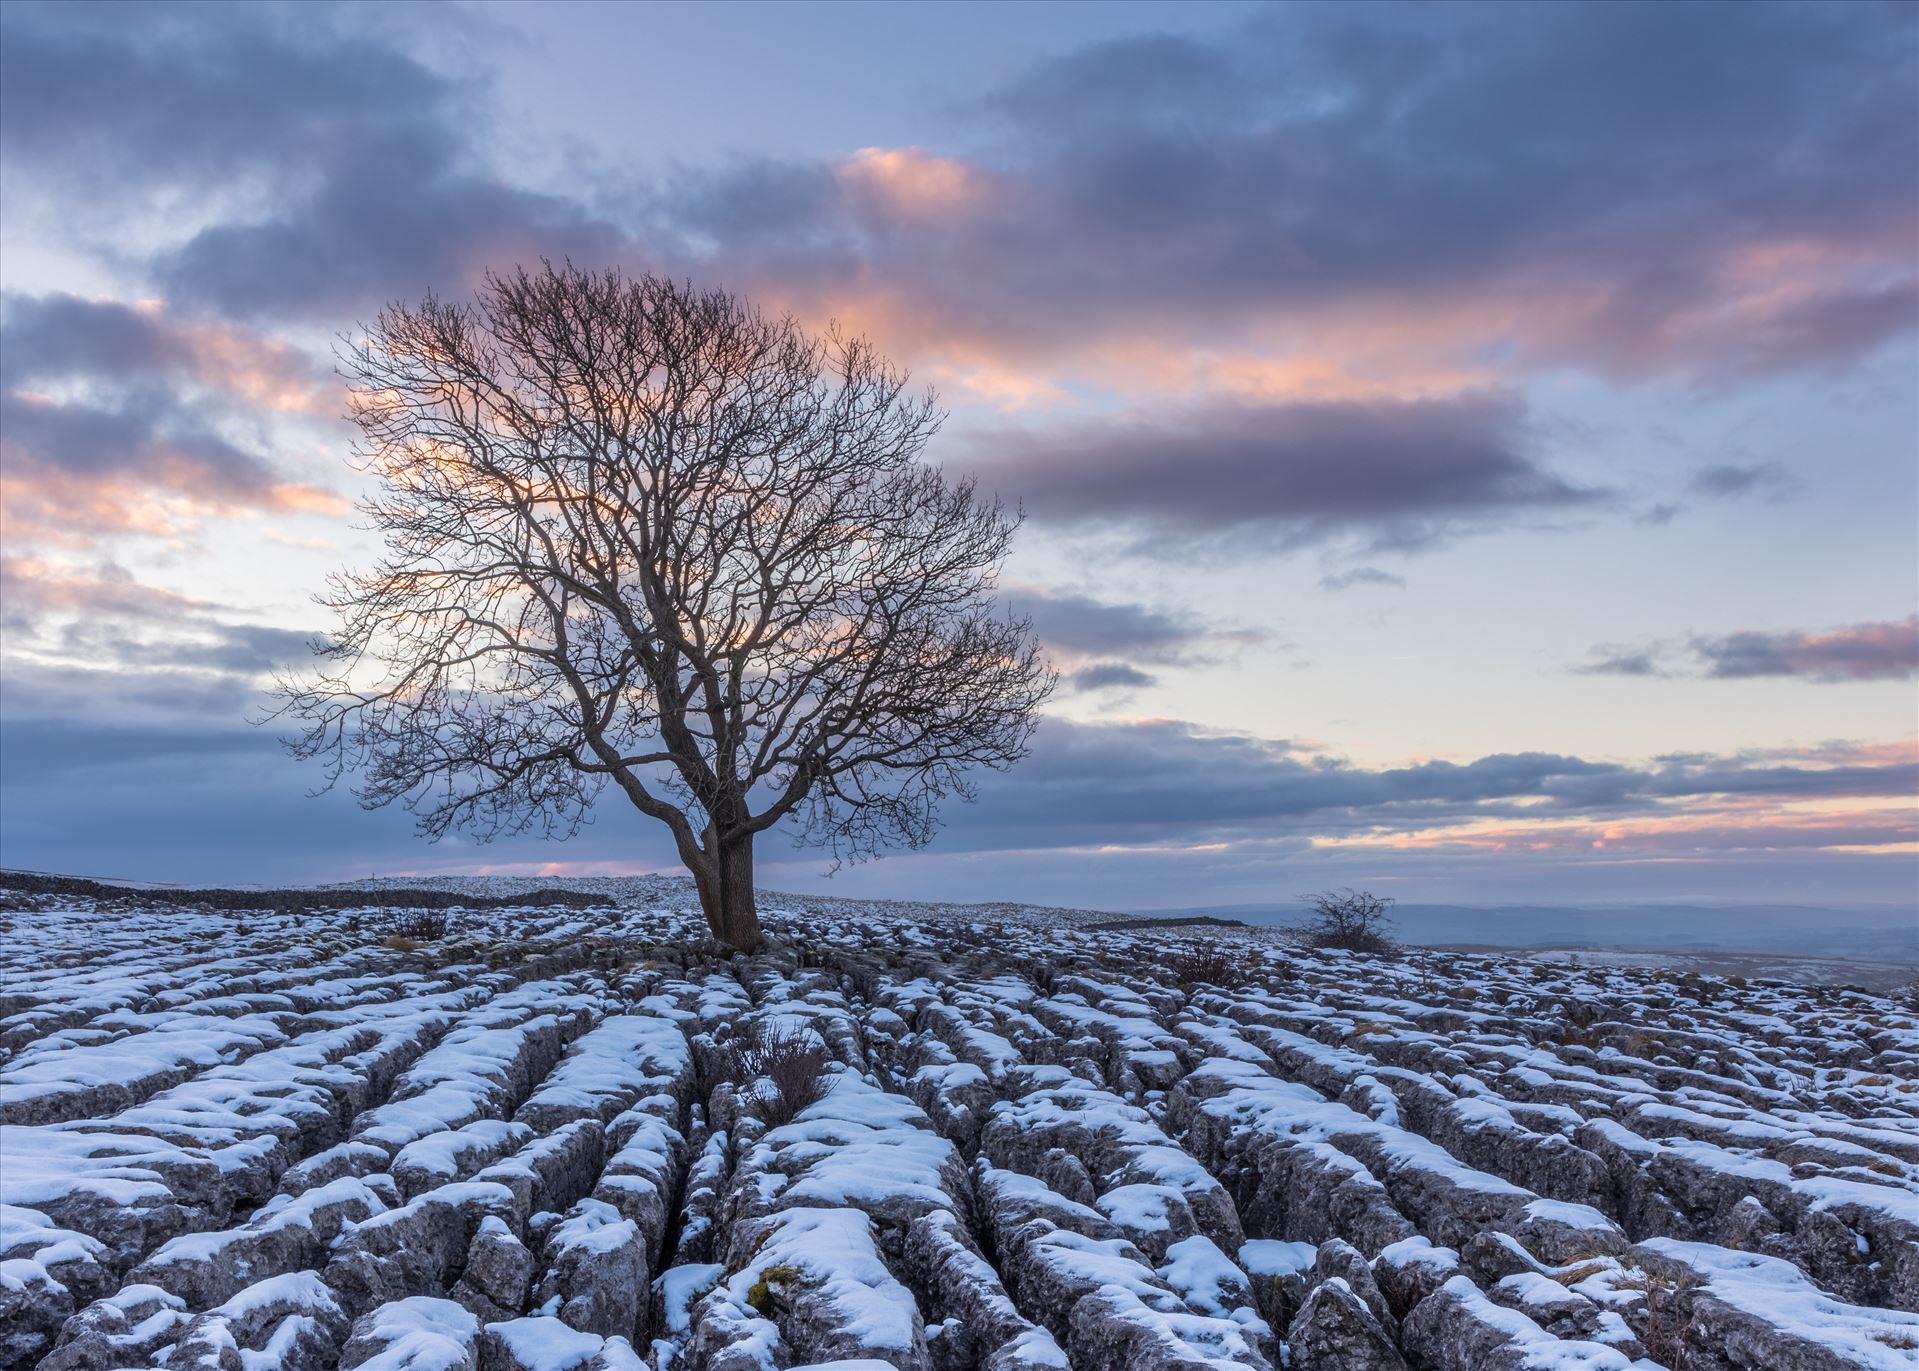 malham lone tree 1.jpg  by Tony Keogh Photography